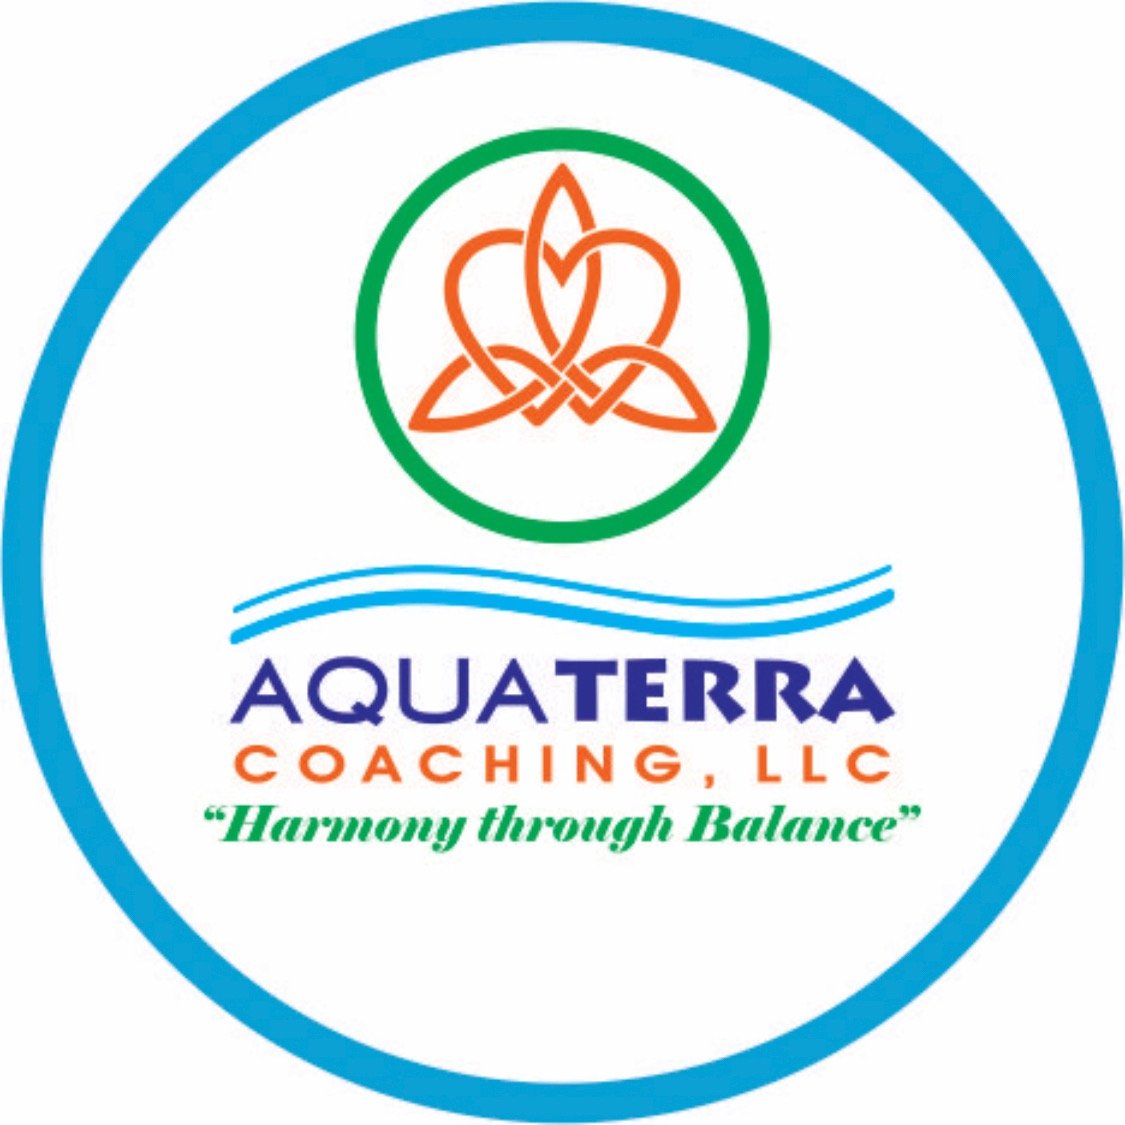 AquaTerra Coaching, LLC